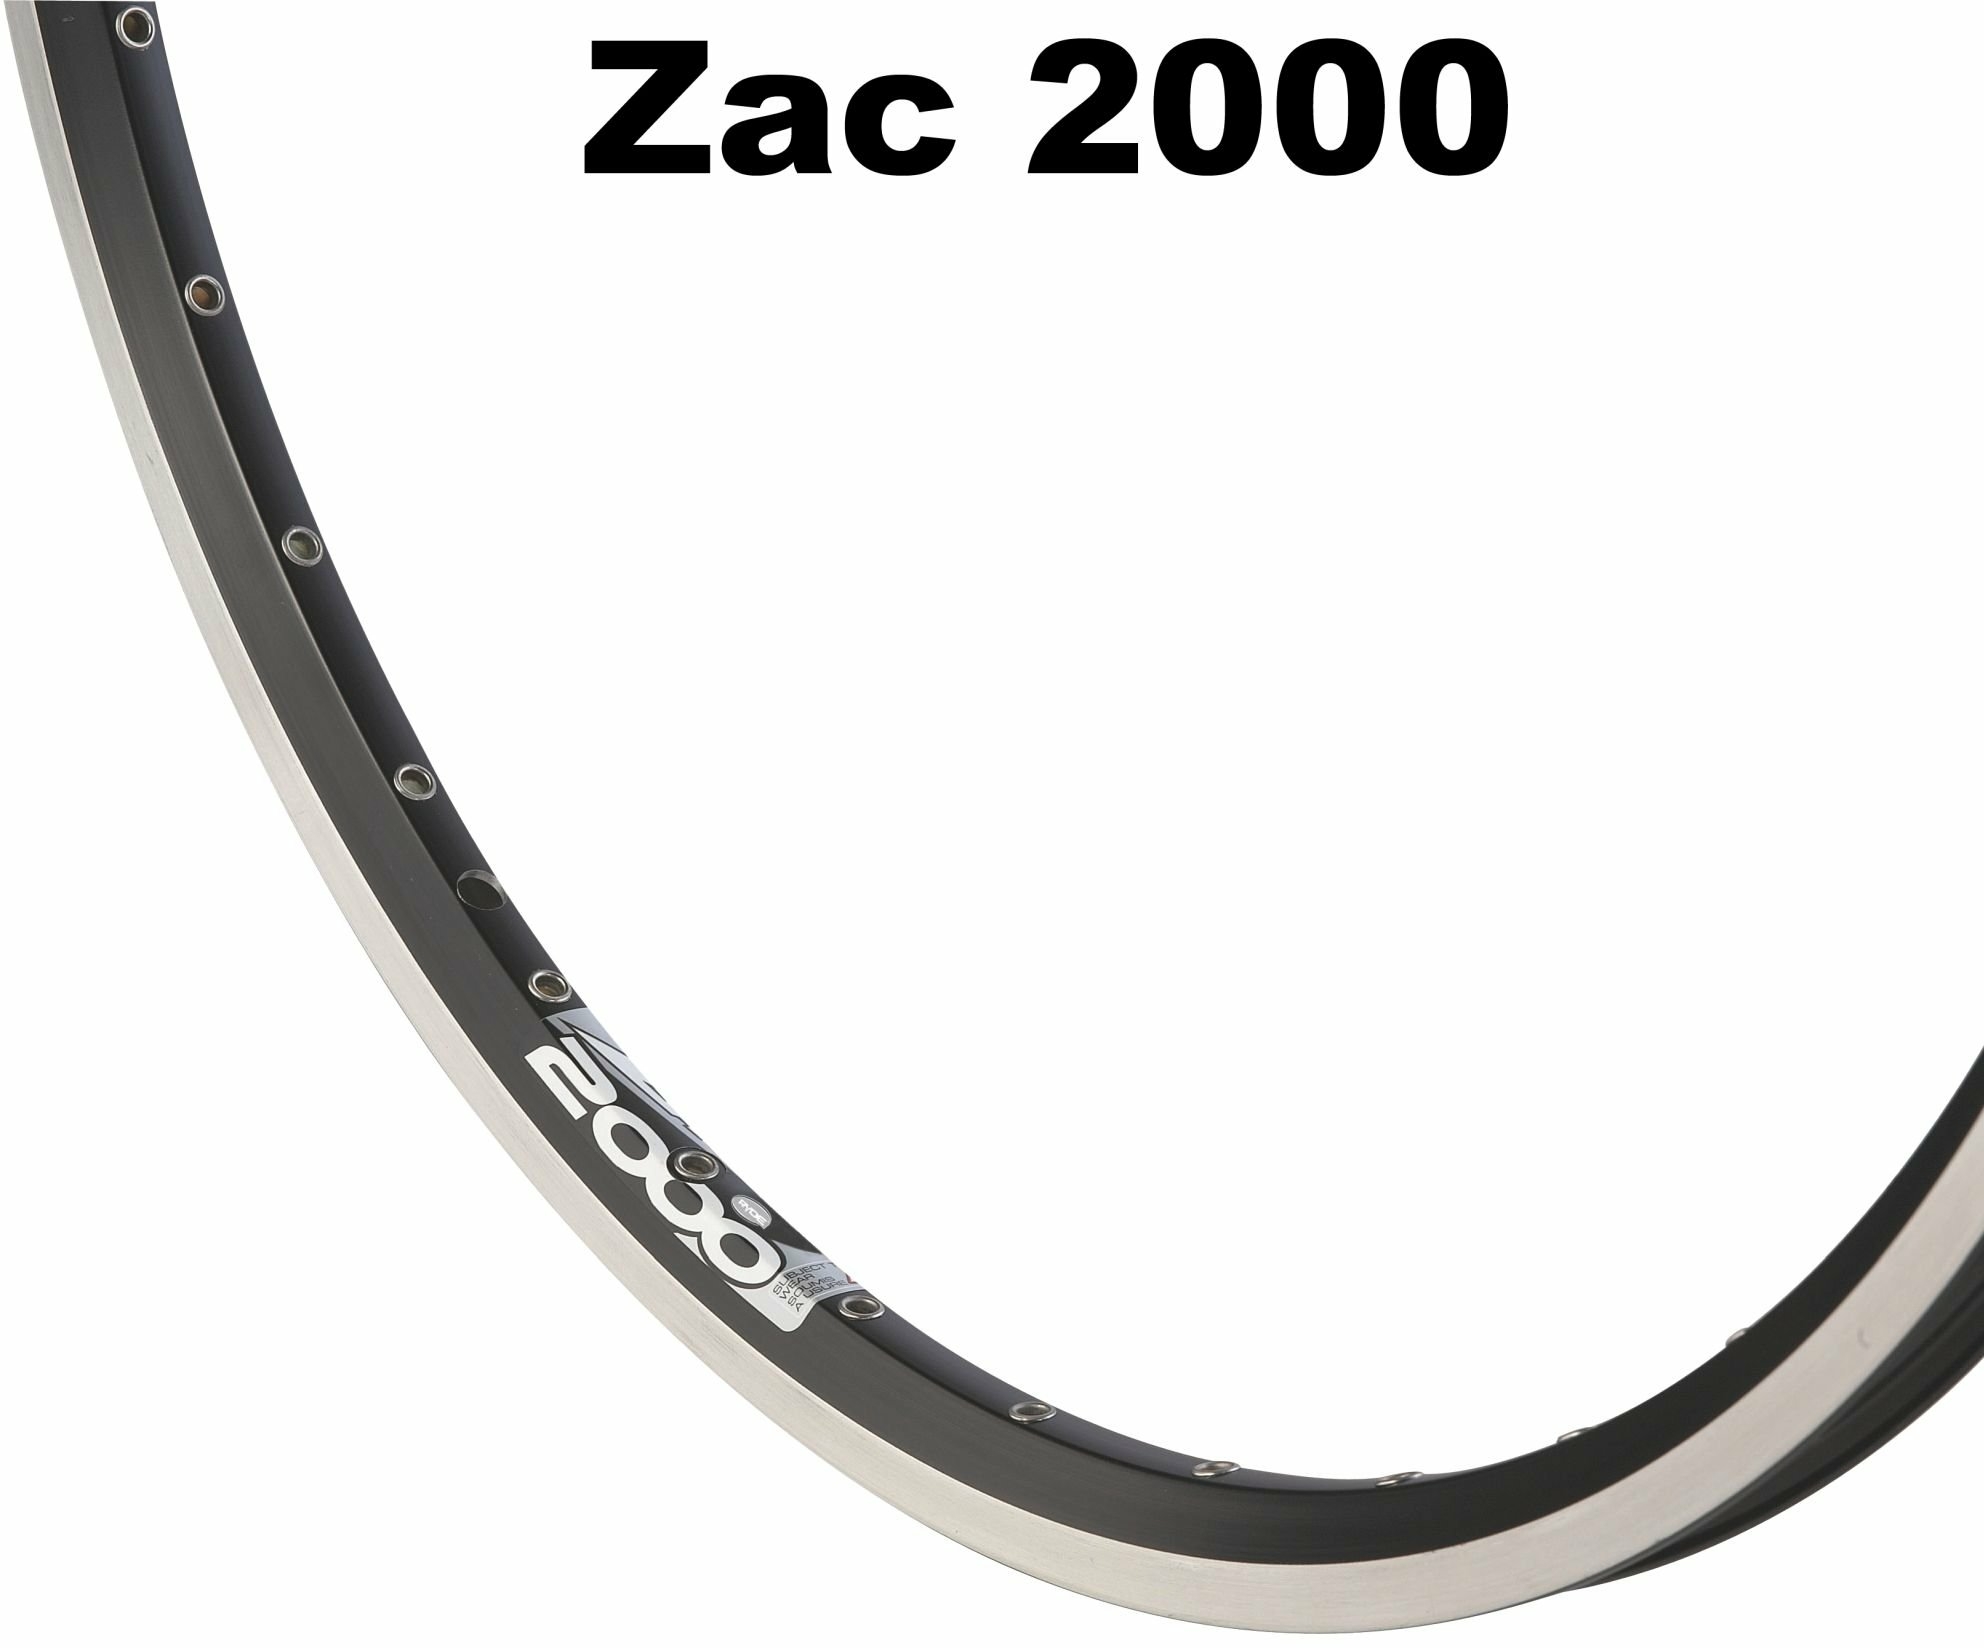 RYDE Hinterrad ZAC 2000 (M610), 28 Zoll